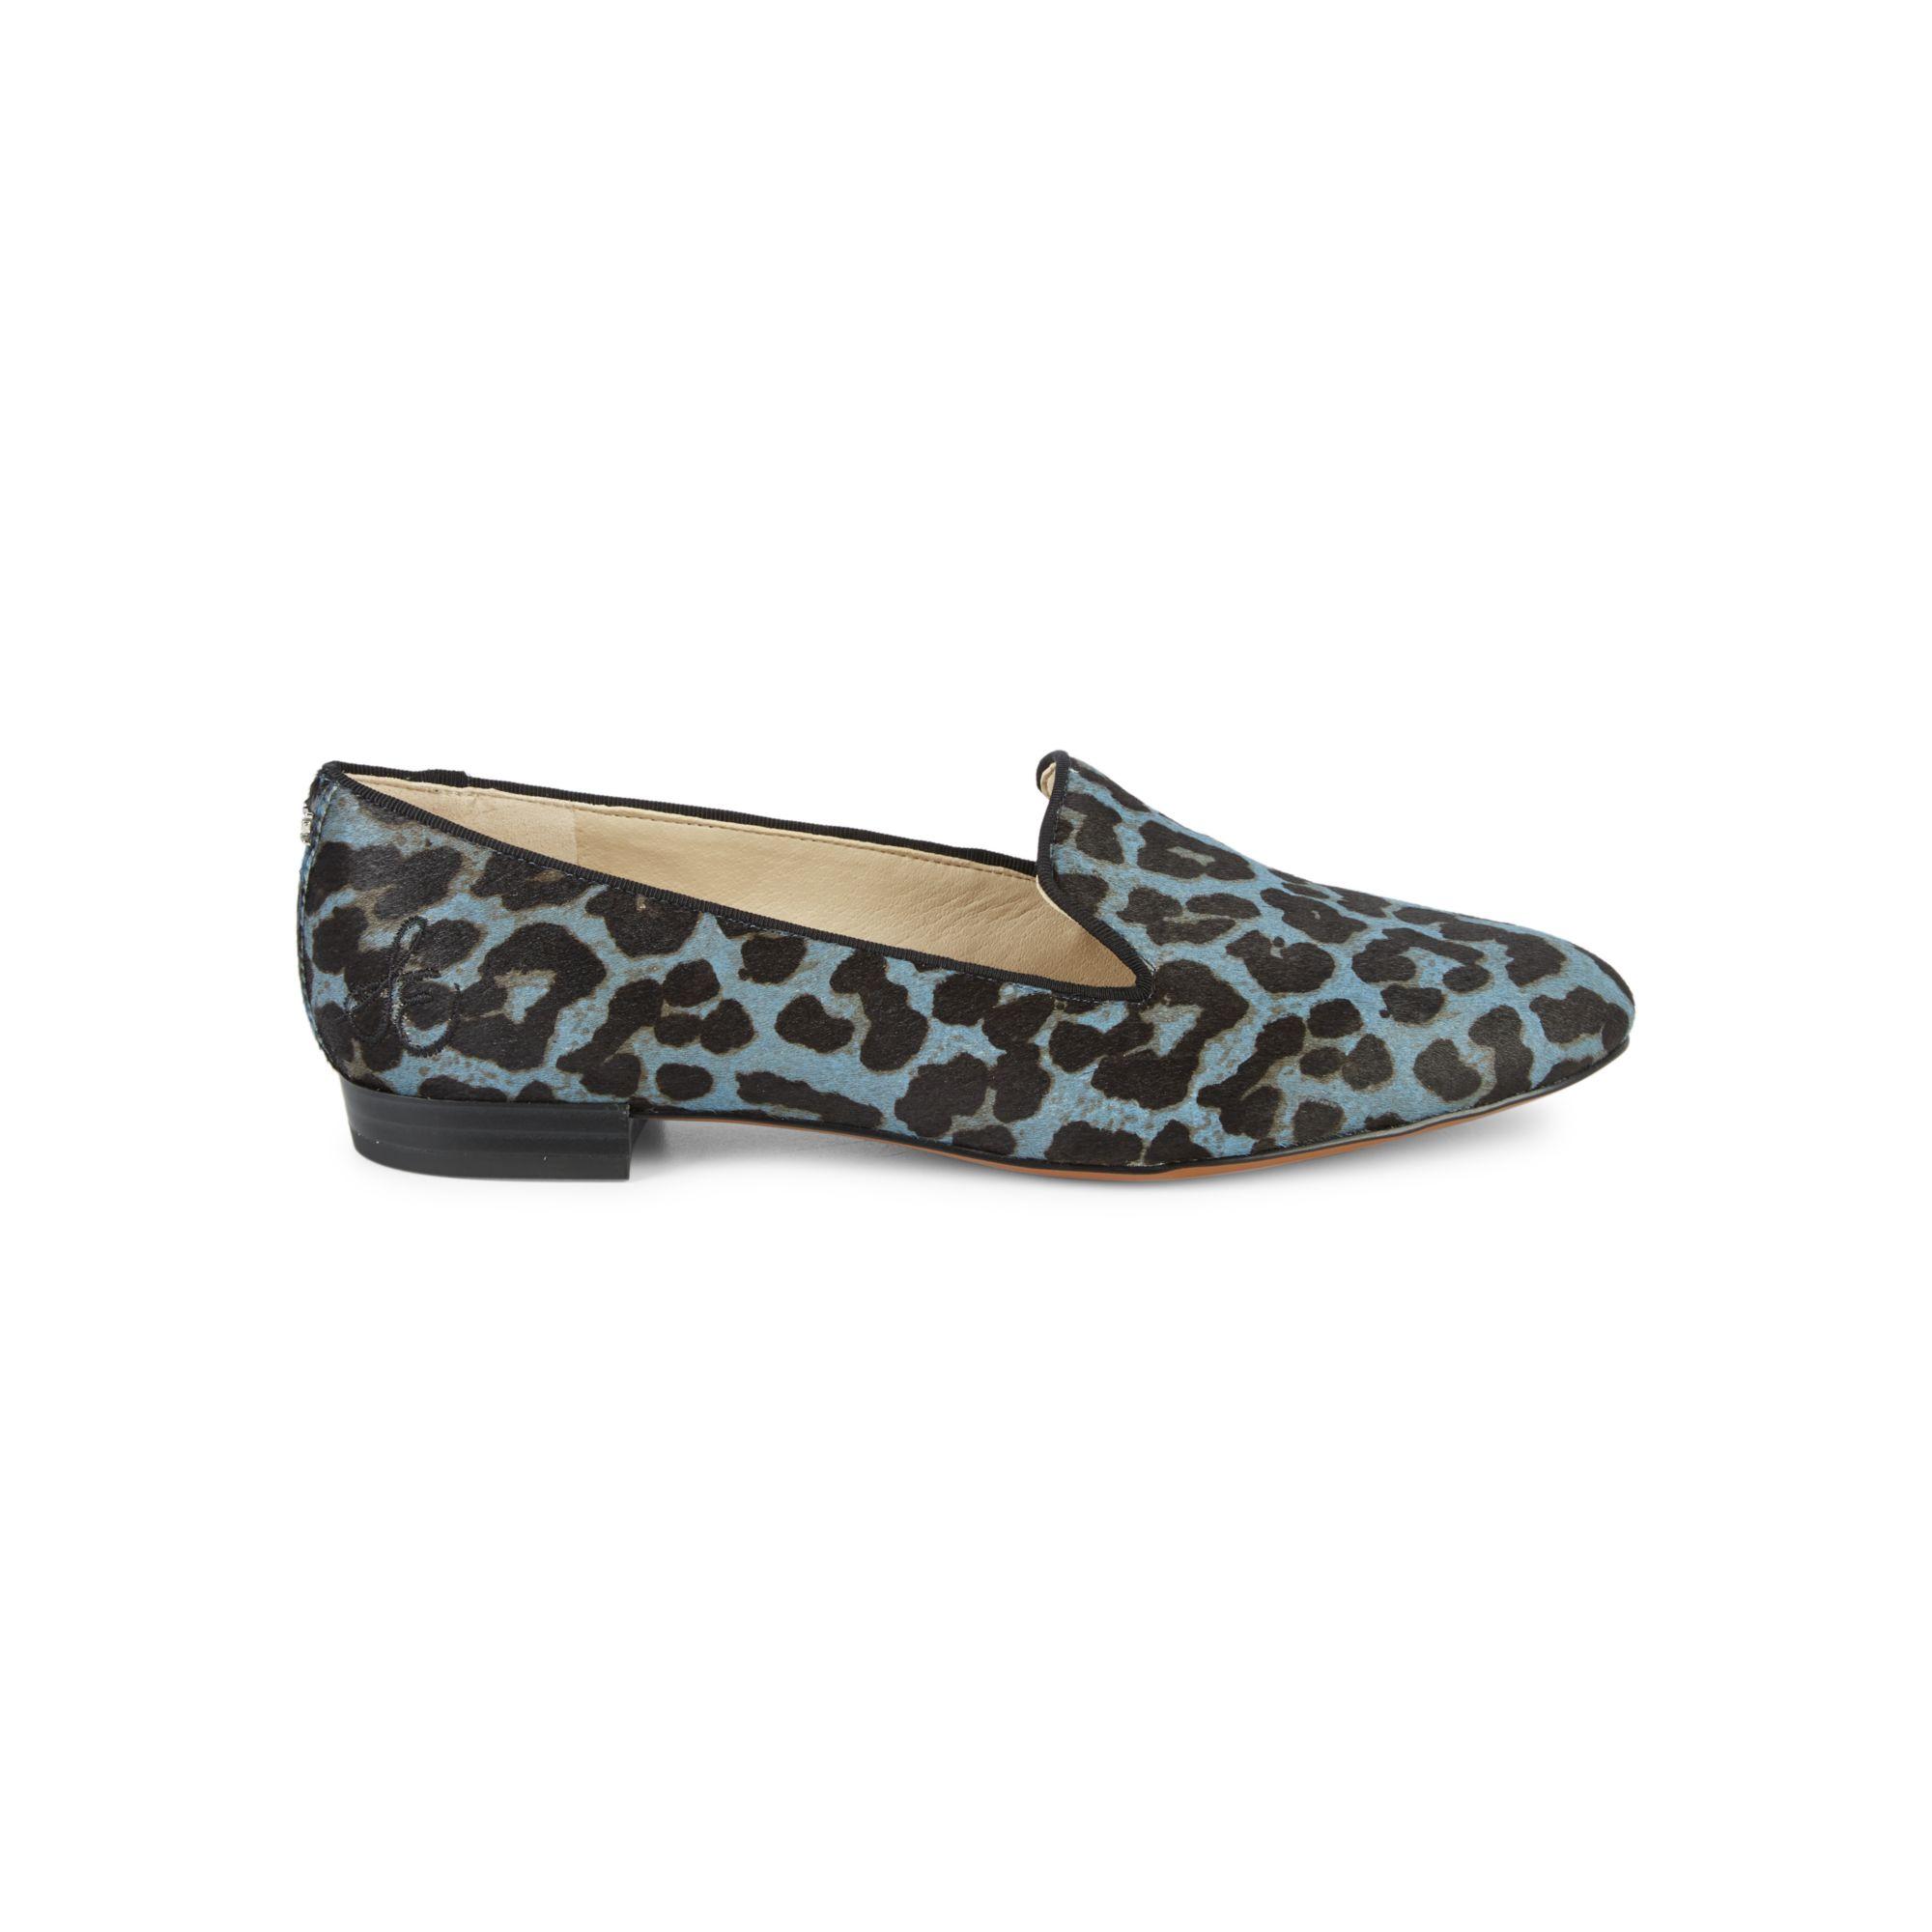 Sam Edelman Leather Jordy Leopard Calf Hair Loafers in Blue - Lyst